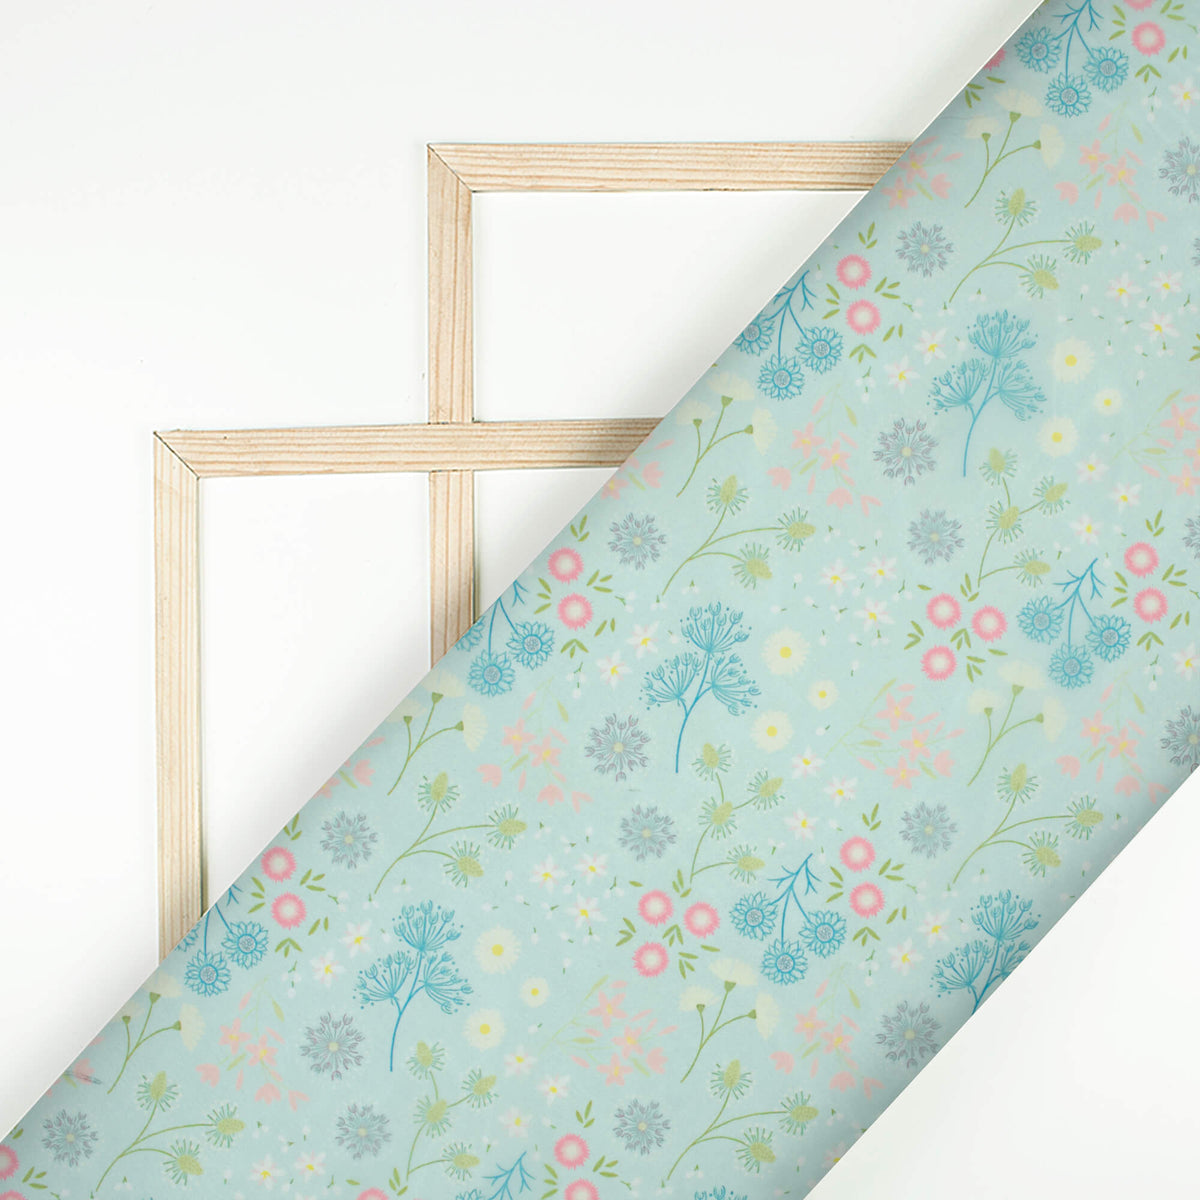 Sky Blue And Taffy Pink Floral Pattern Digital Print Organza Satin Fabric